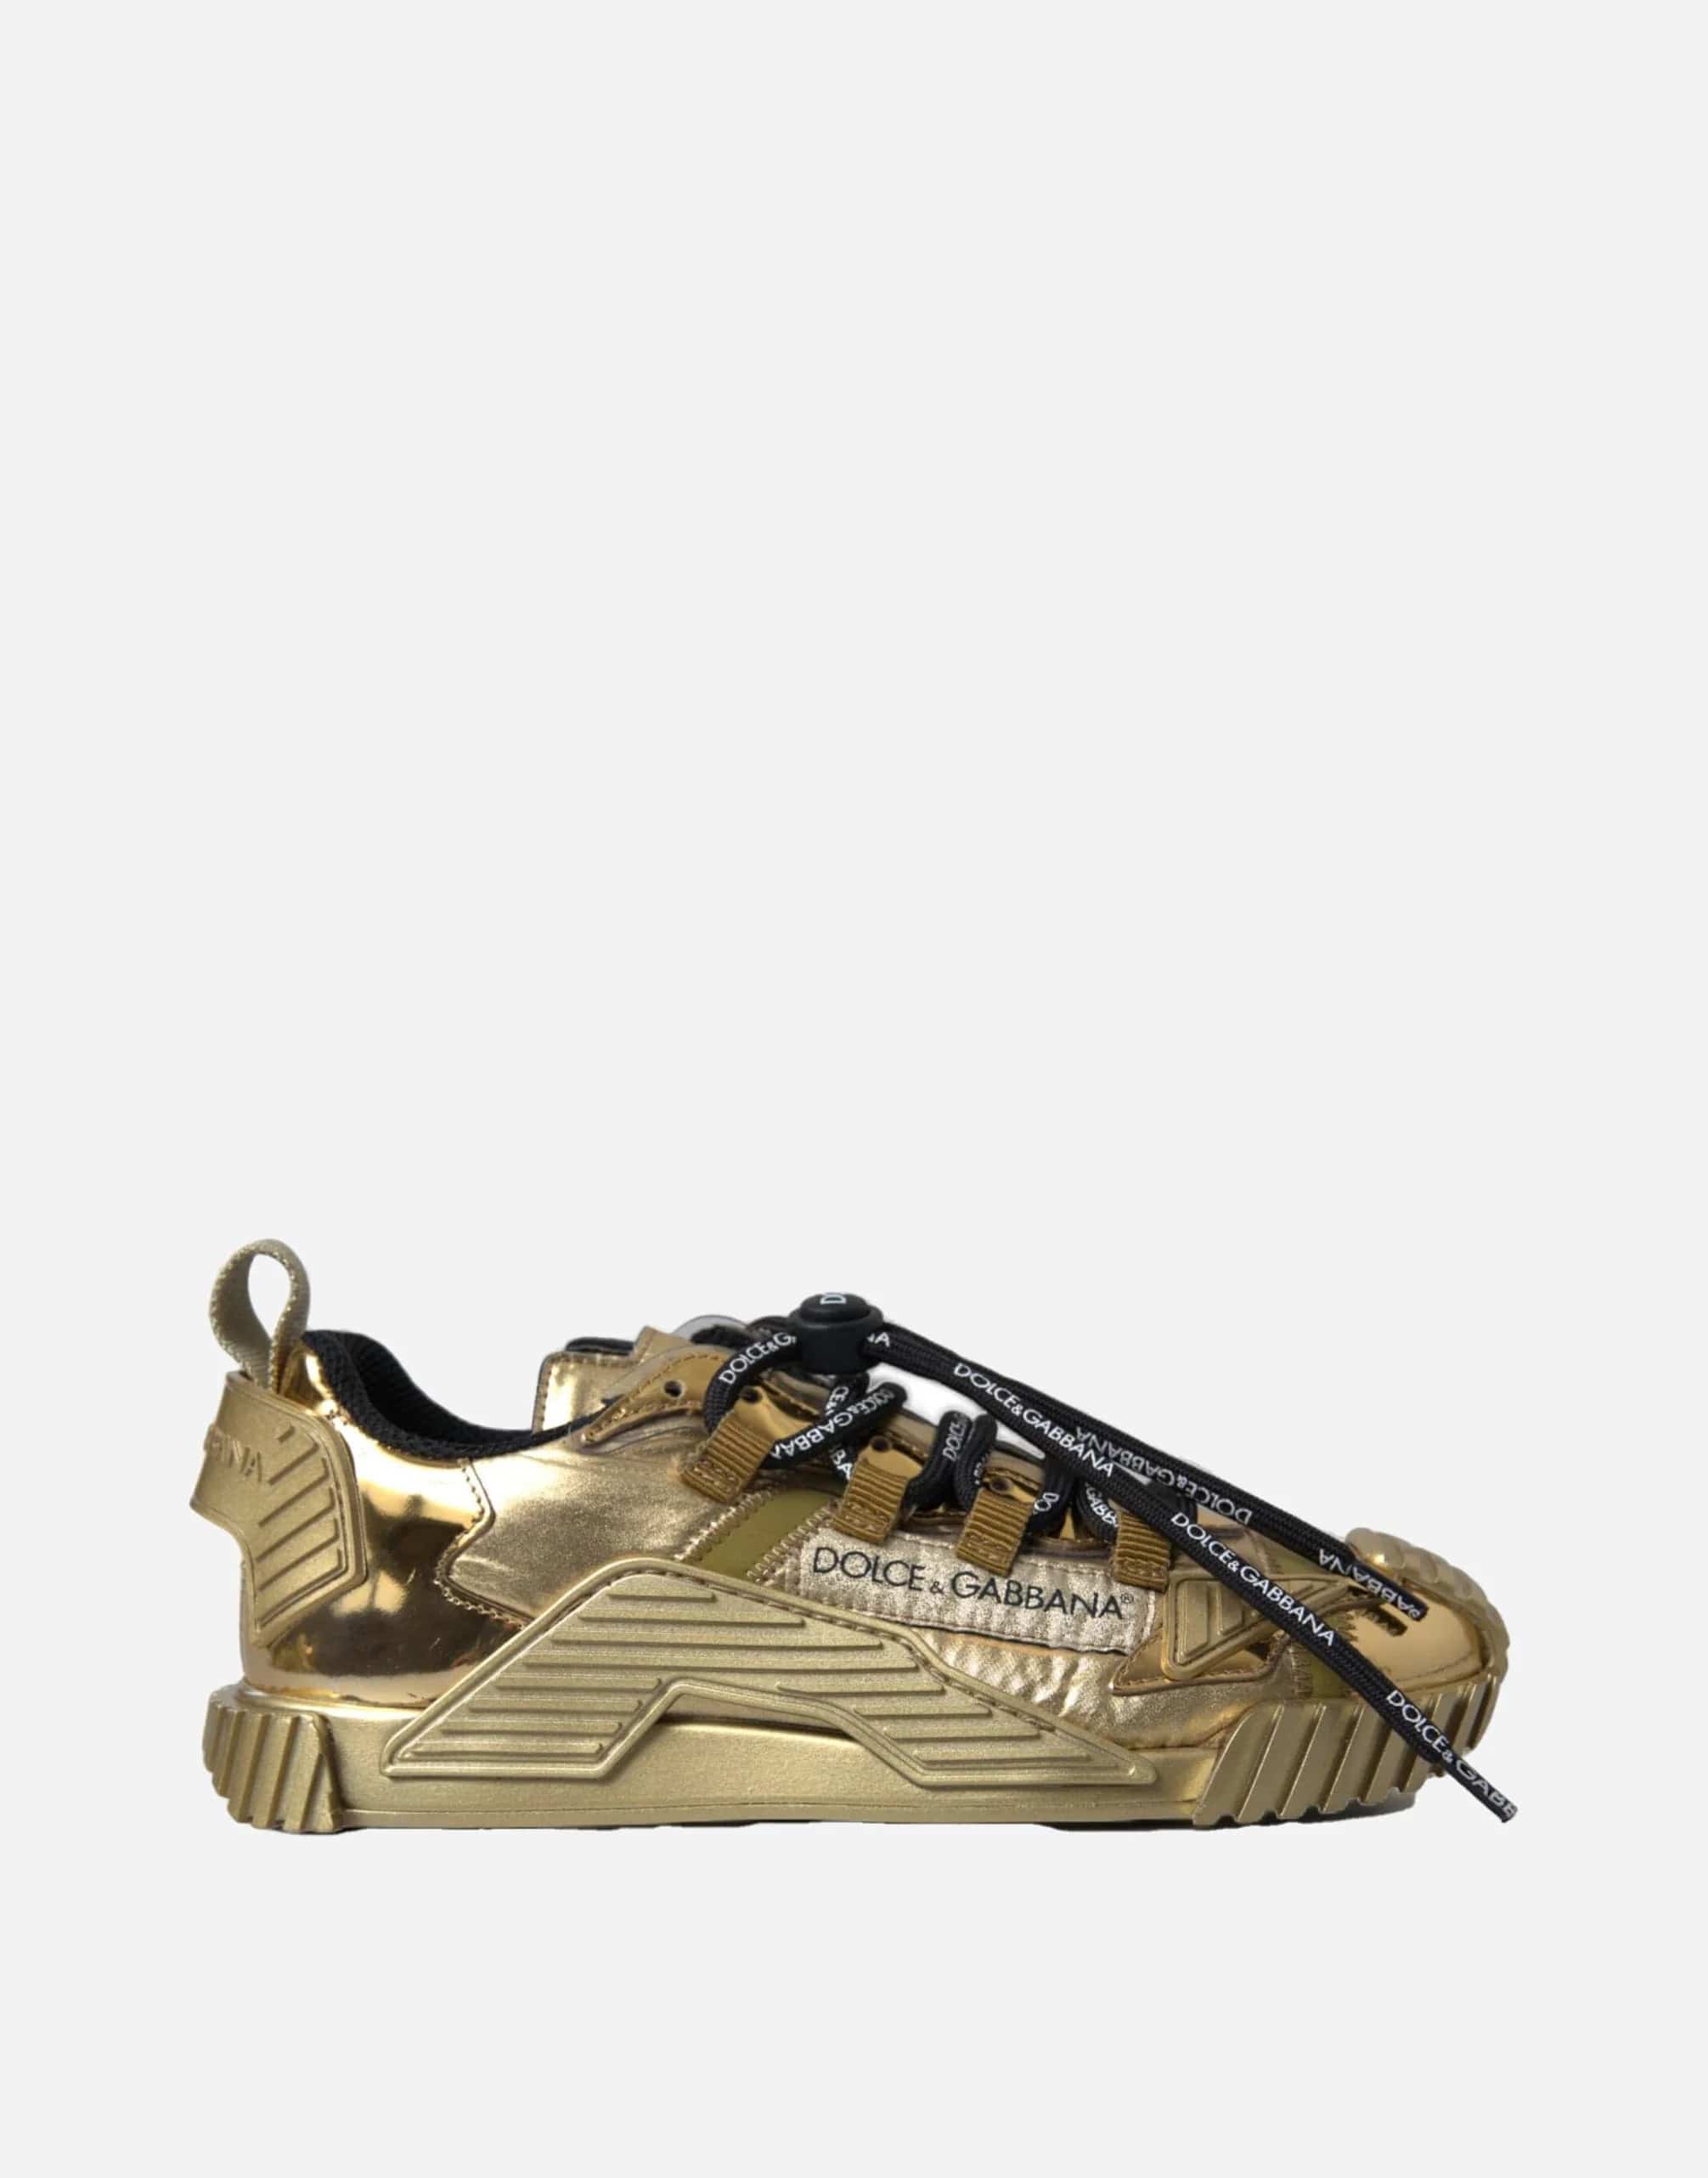 Dolce & Gabbana Metallic NS1 Low Top Sneakers